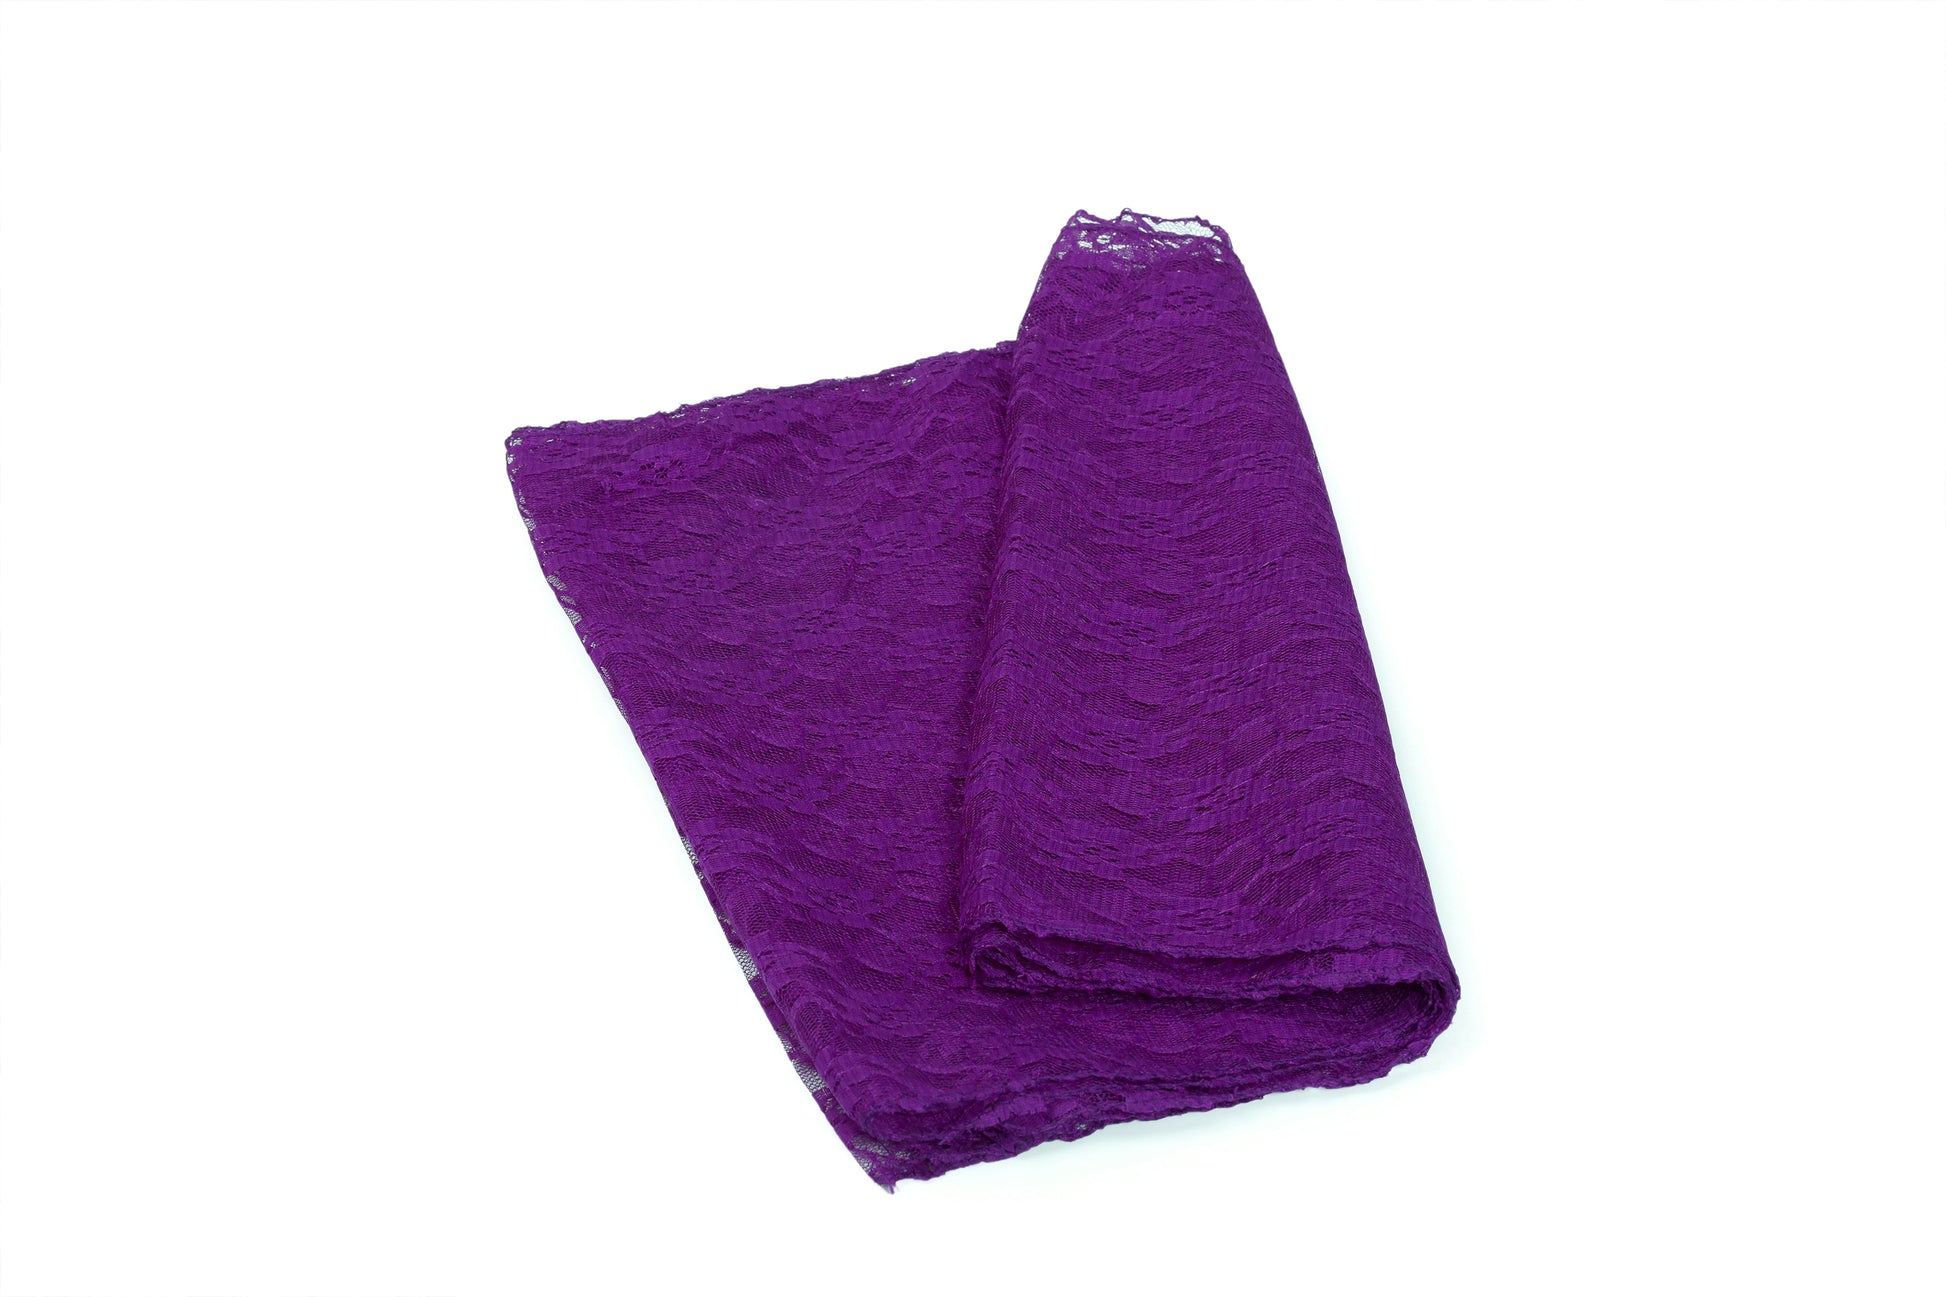 Cadbury Purple,b346eb74-972c-46d3-b1ea-46414a158c93